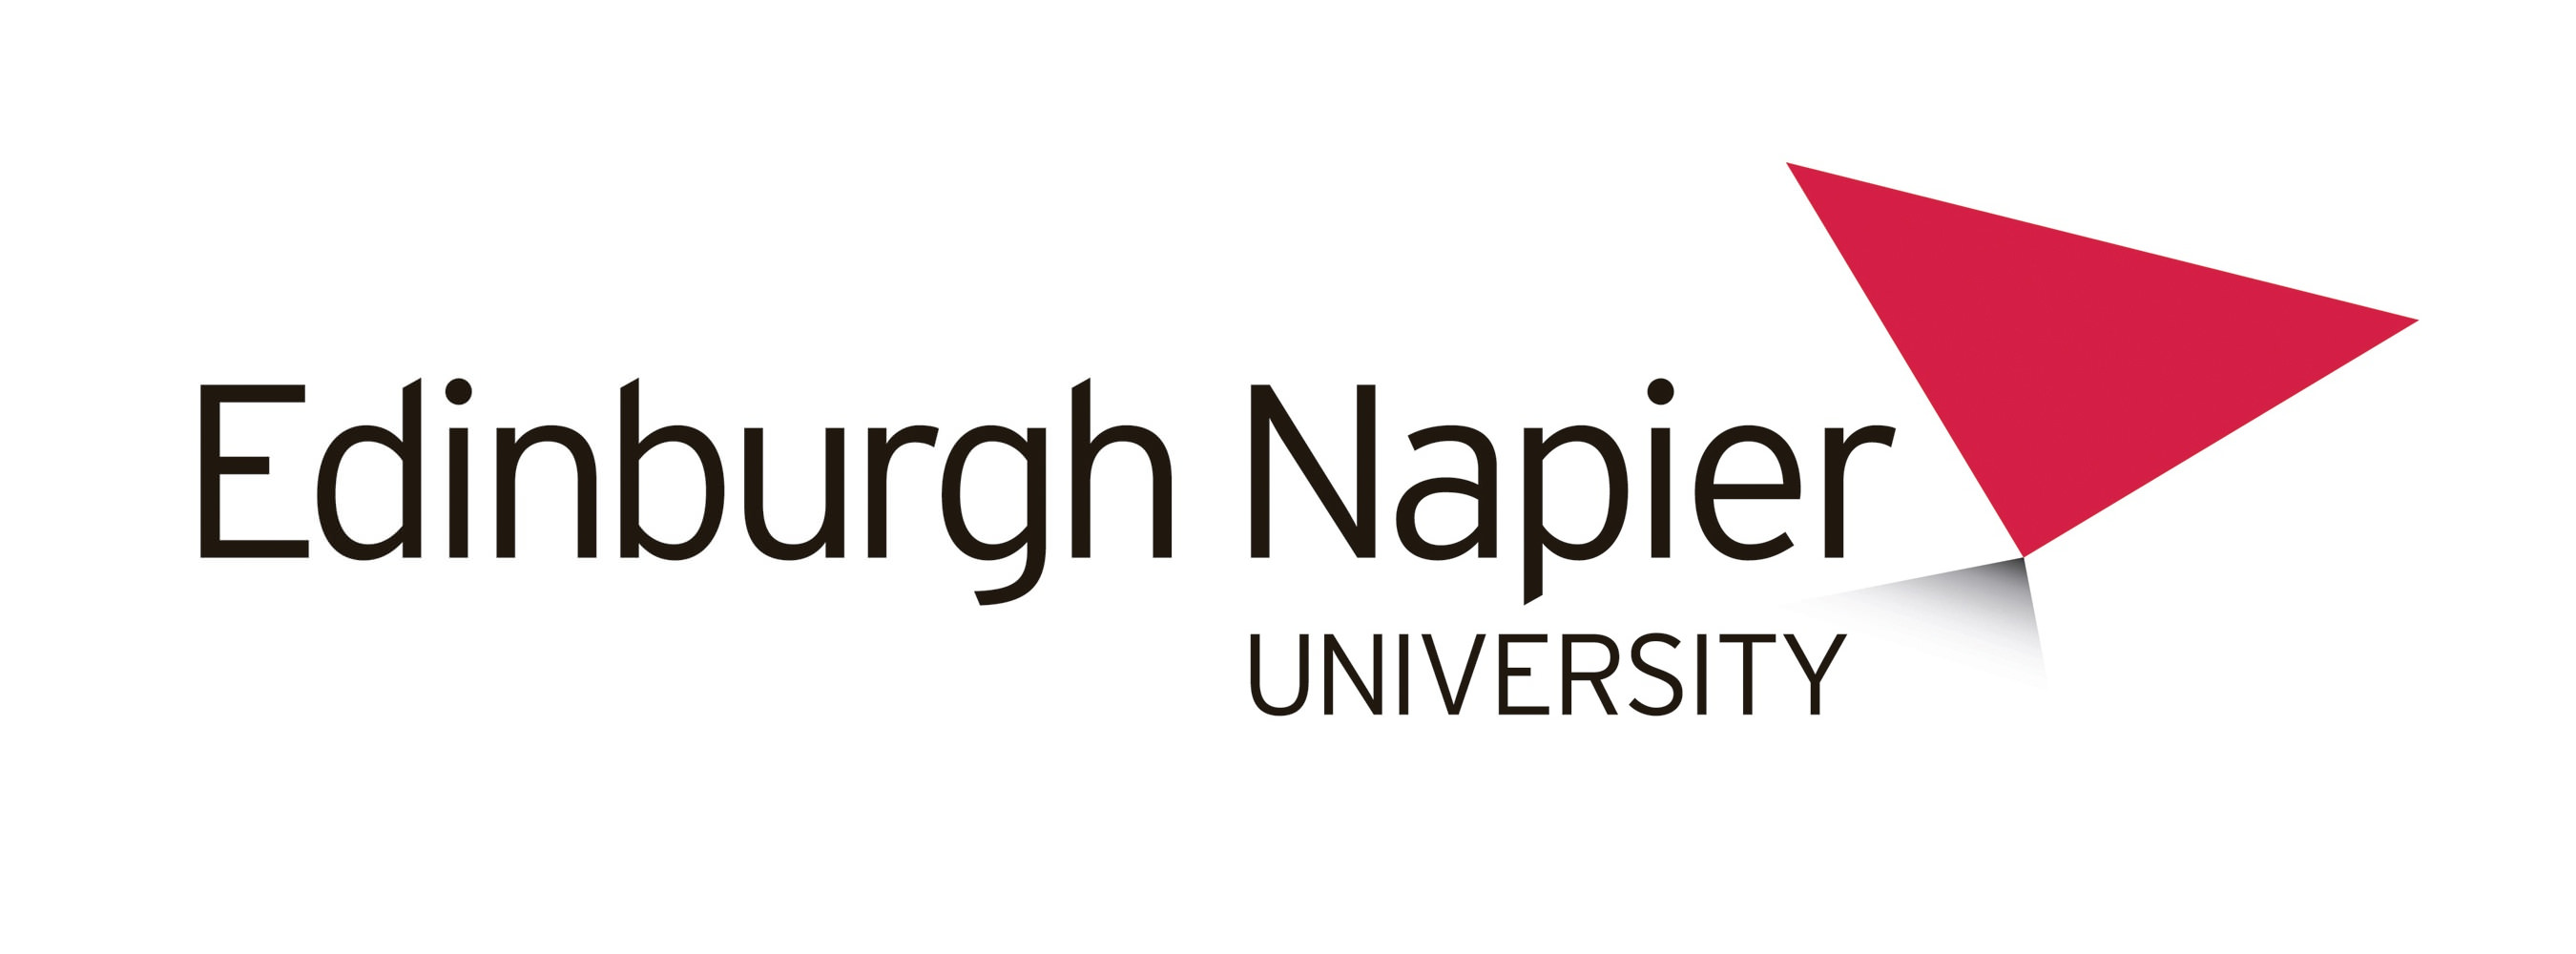 ediburgh-napier-uni-logo-rgb.jpg